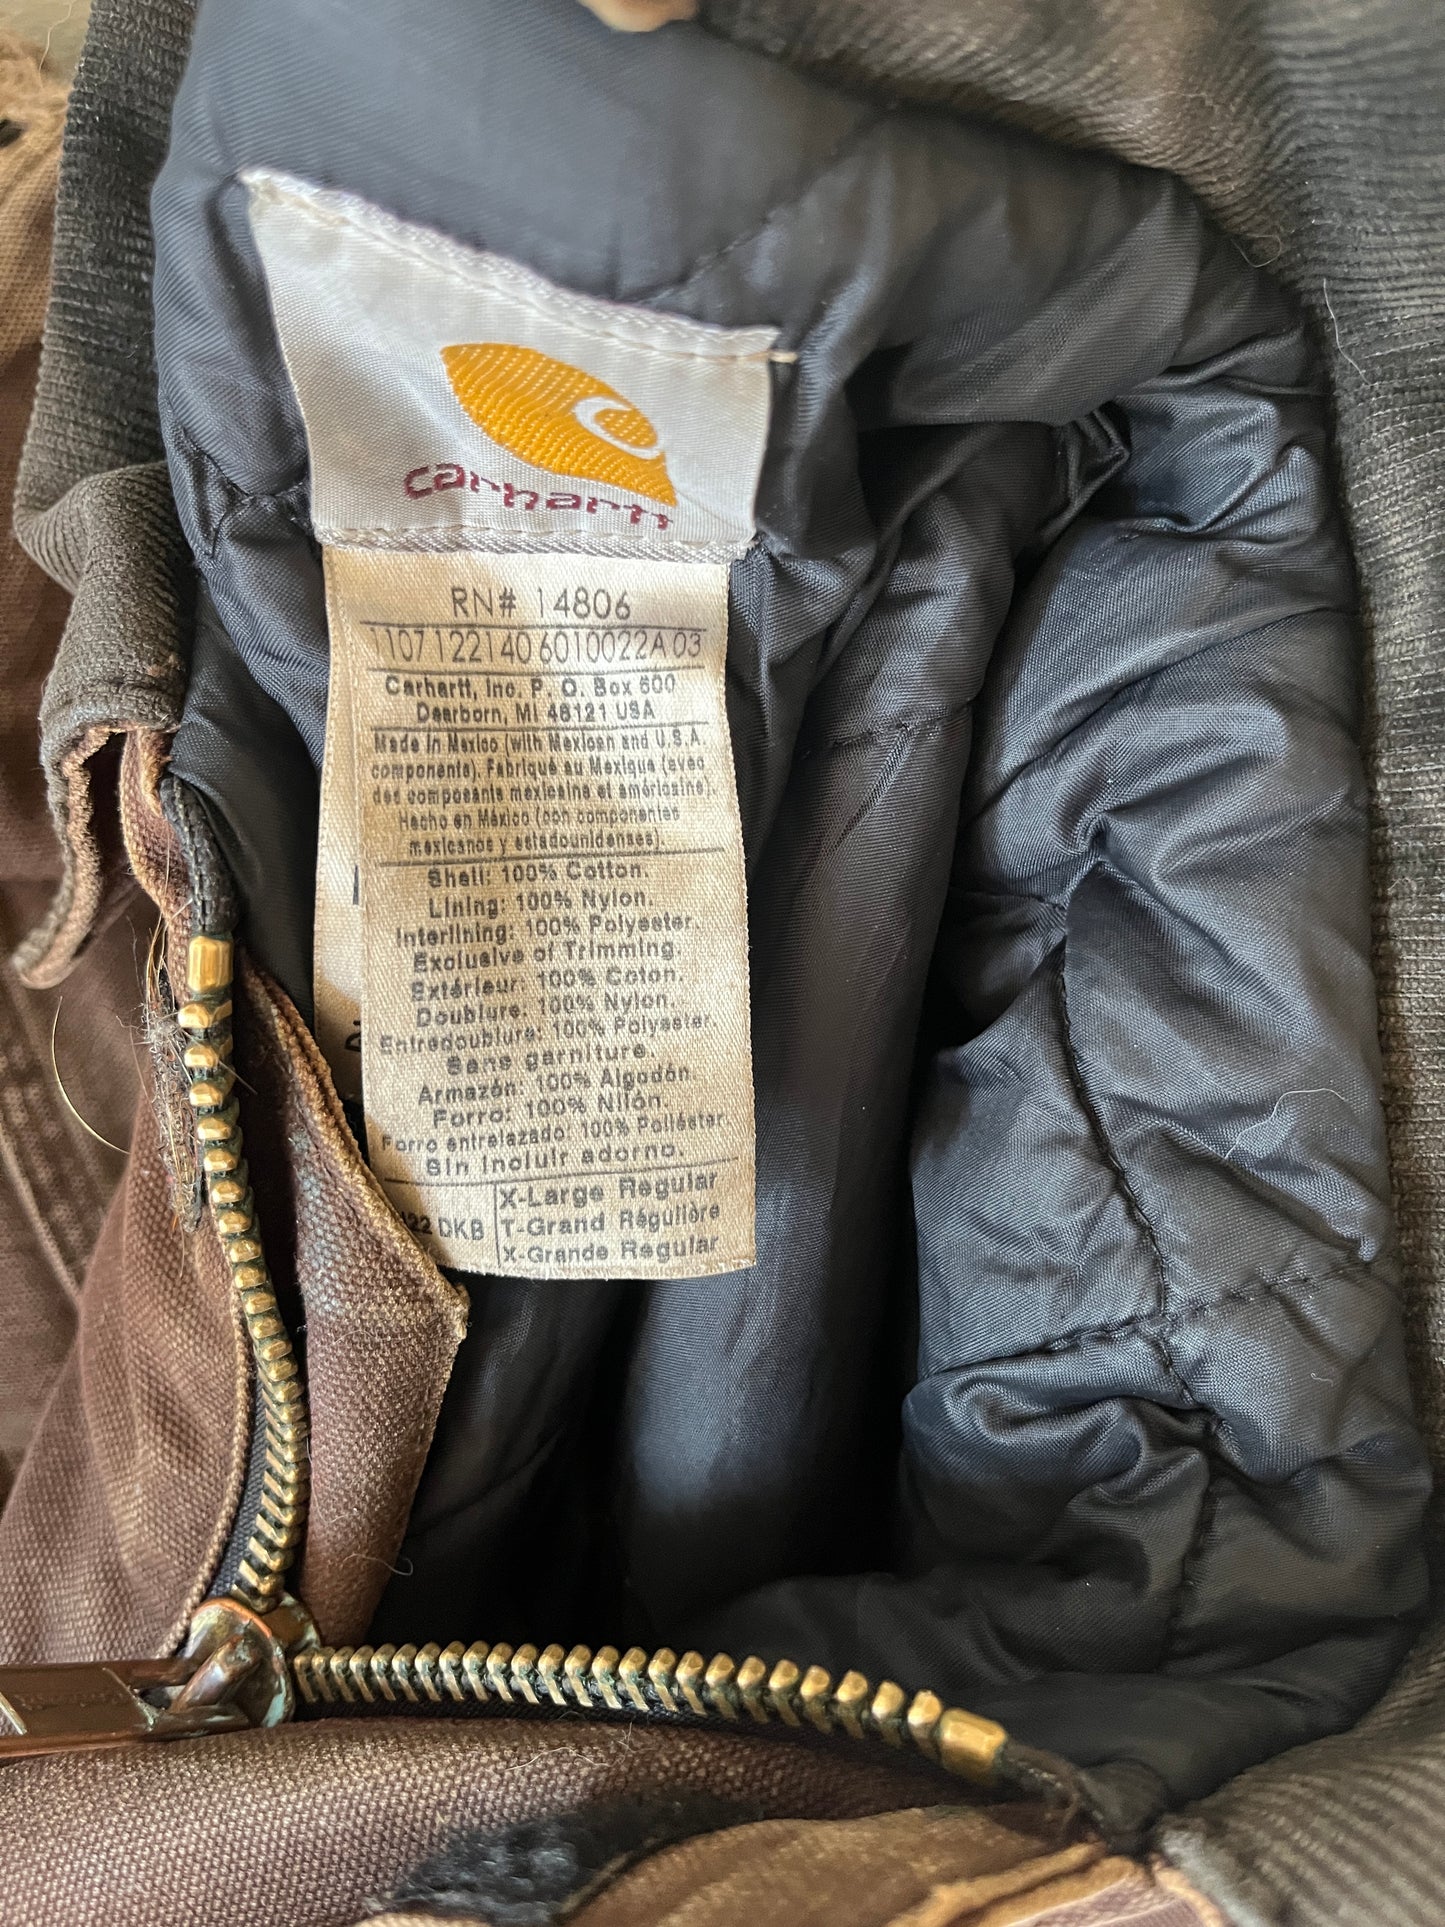 Faded Brown Carhartt Arctic Jacket - Fits L-XL